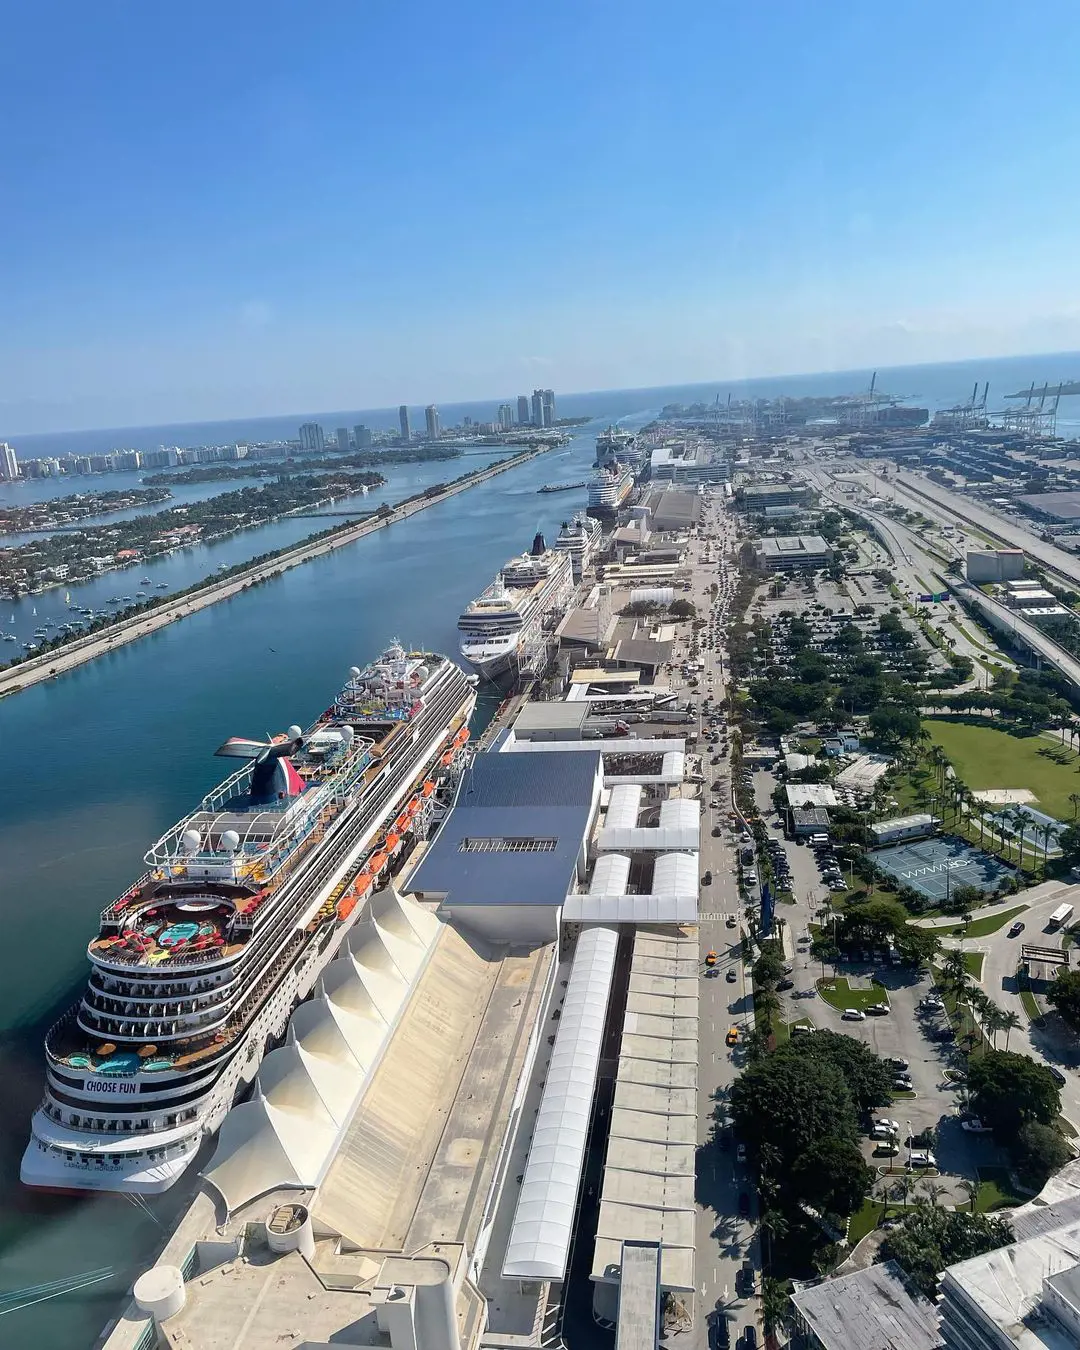 Aerial view of seaside at Miami harbor.